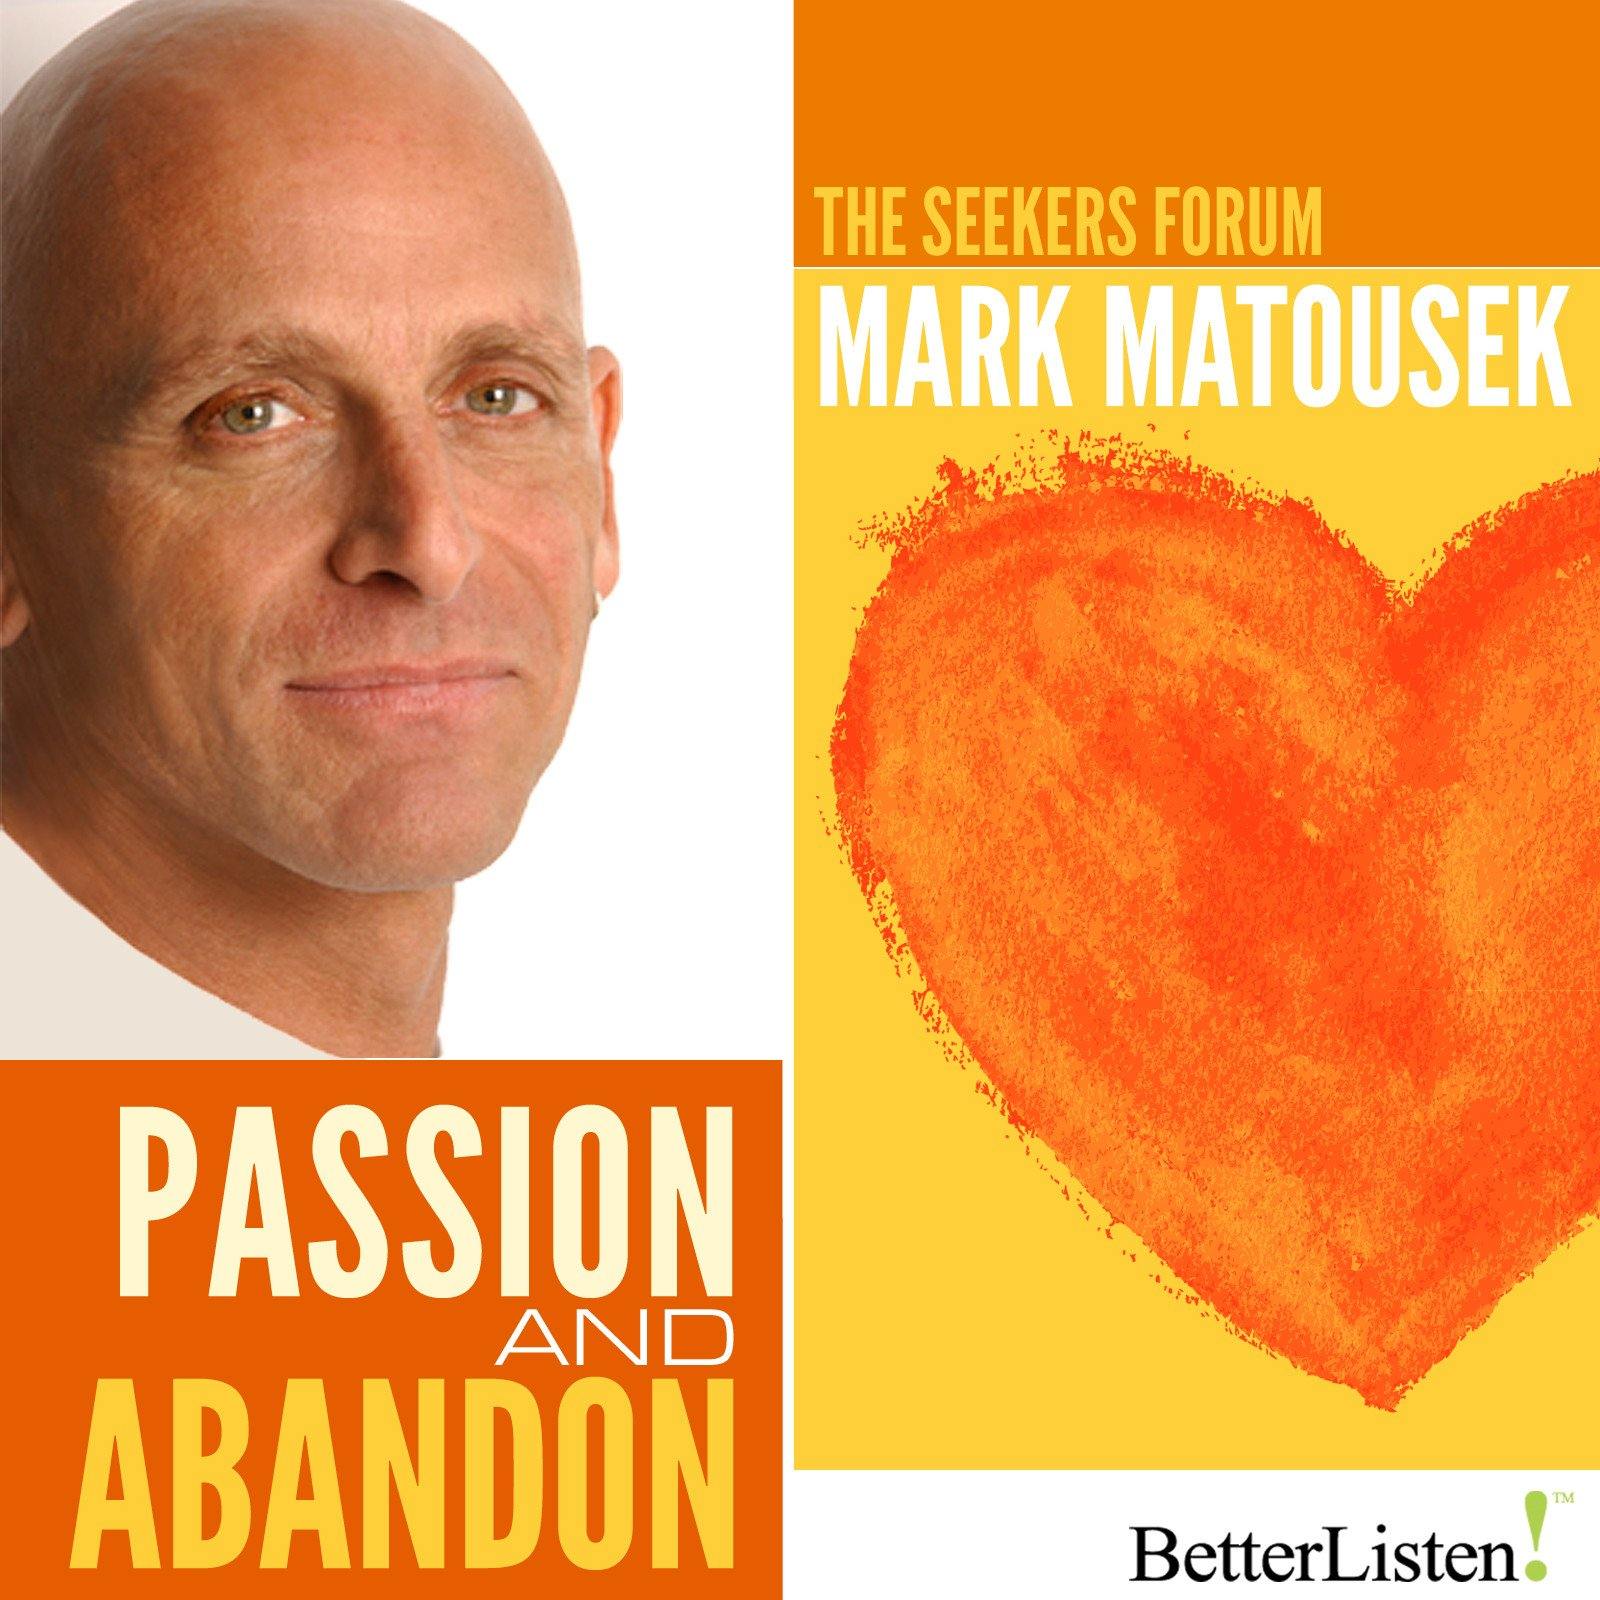 Passion and Abandon with Mark Matousek Audio Program BetterListen! - BetterListen!